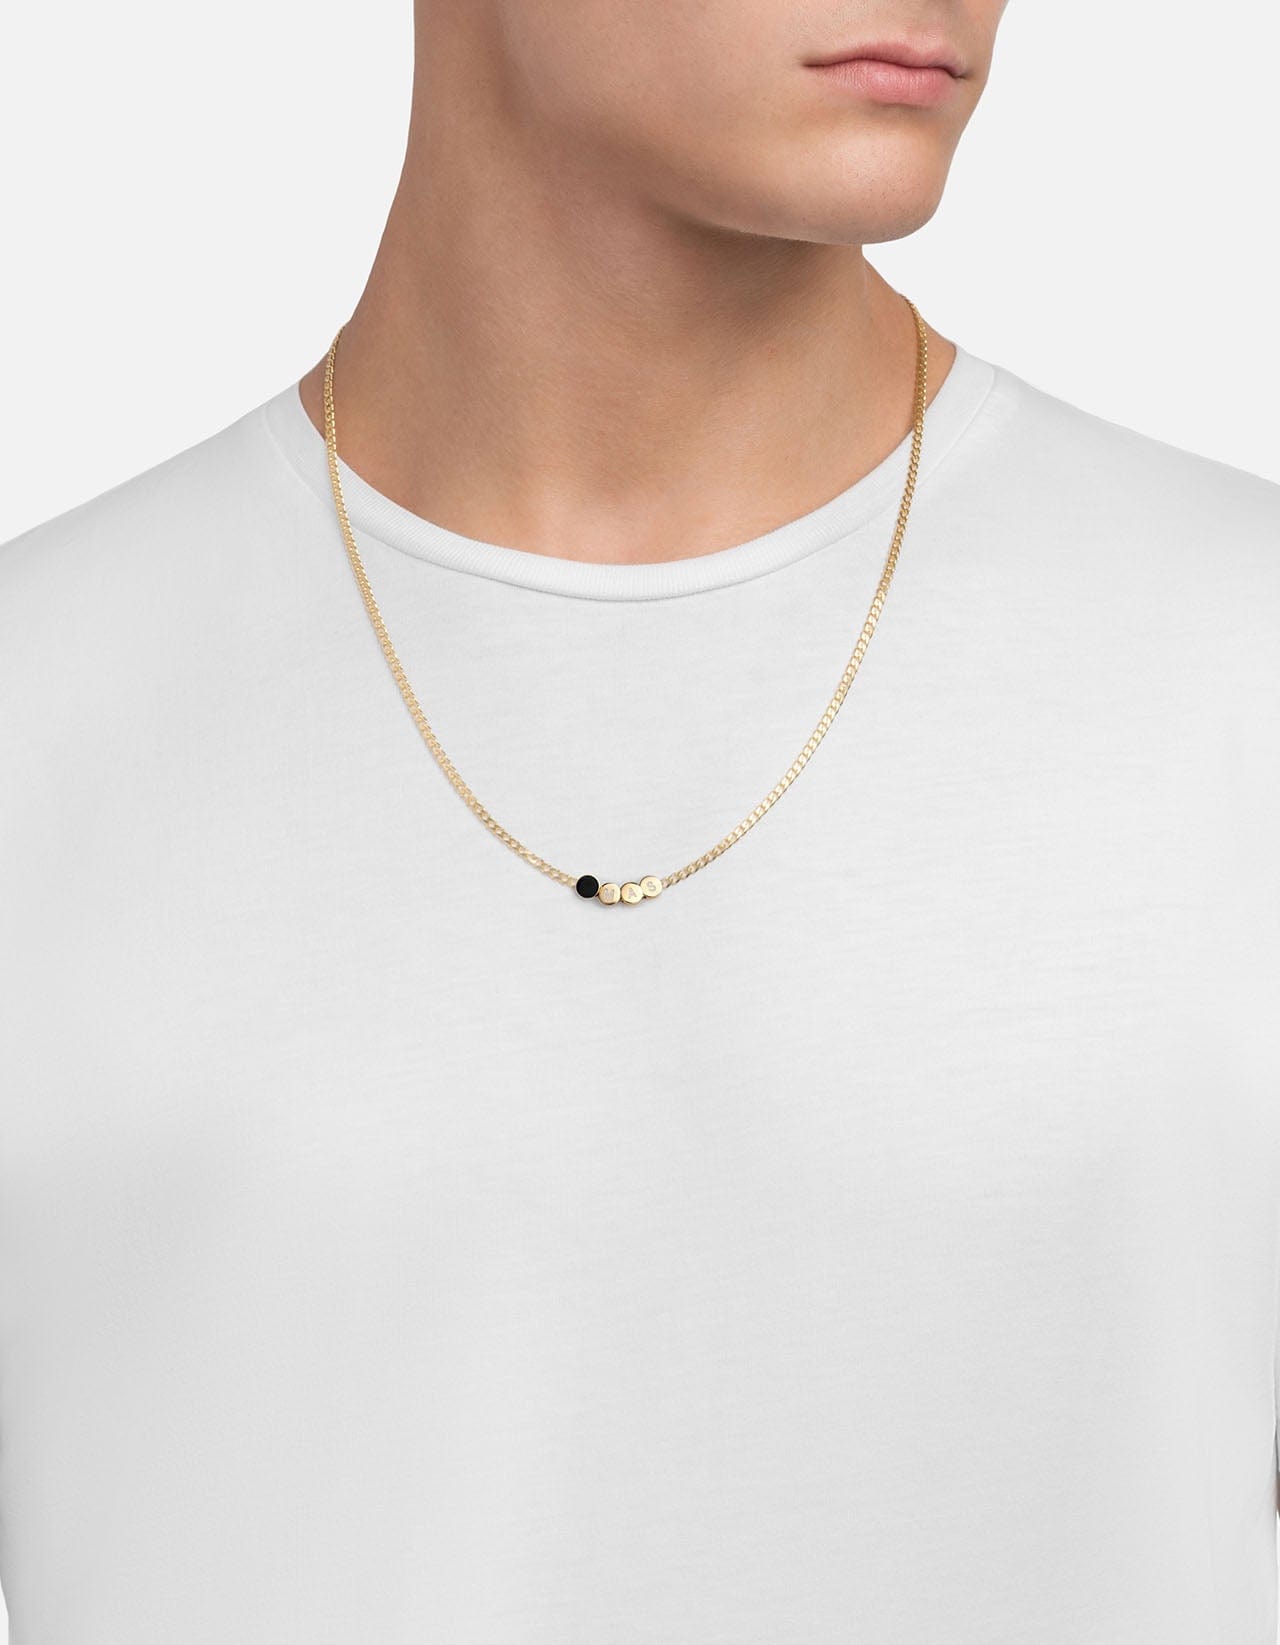 Miansai Men's Volcan Type Chain Necklace